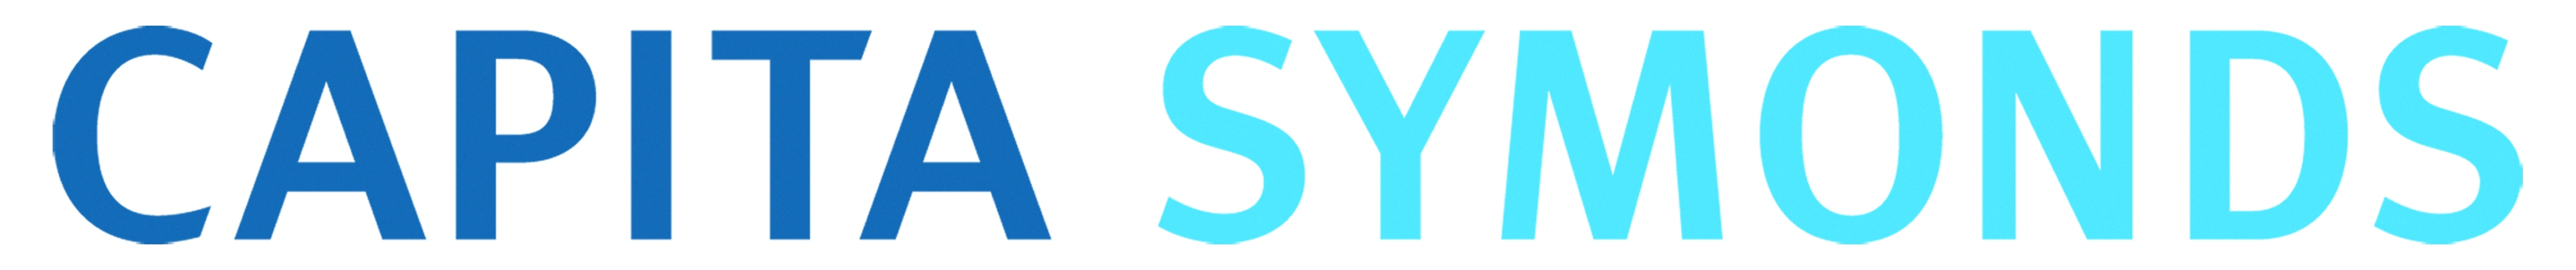 sa-capita-symonds-logo